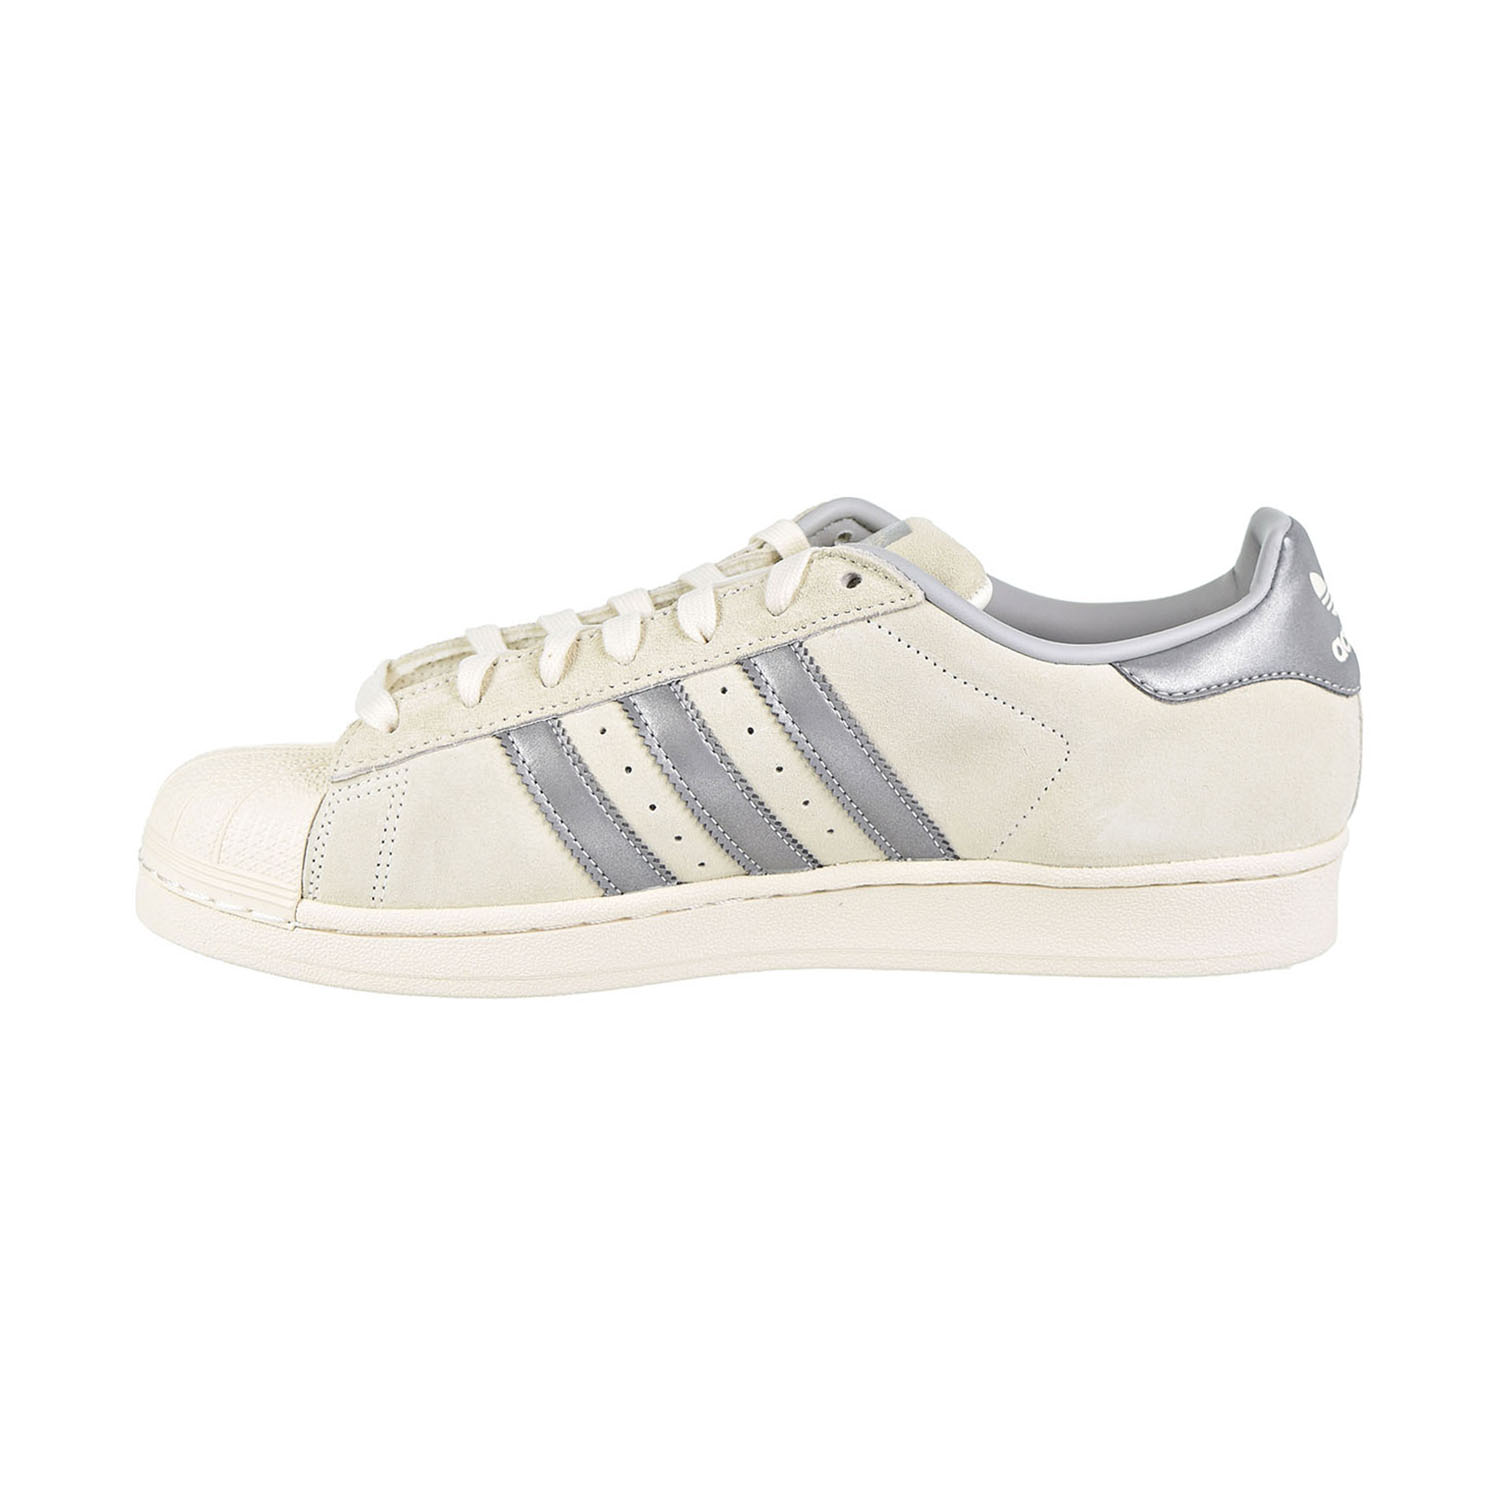 Shoes Off White-Supplier Colour b41989 